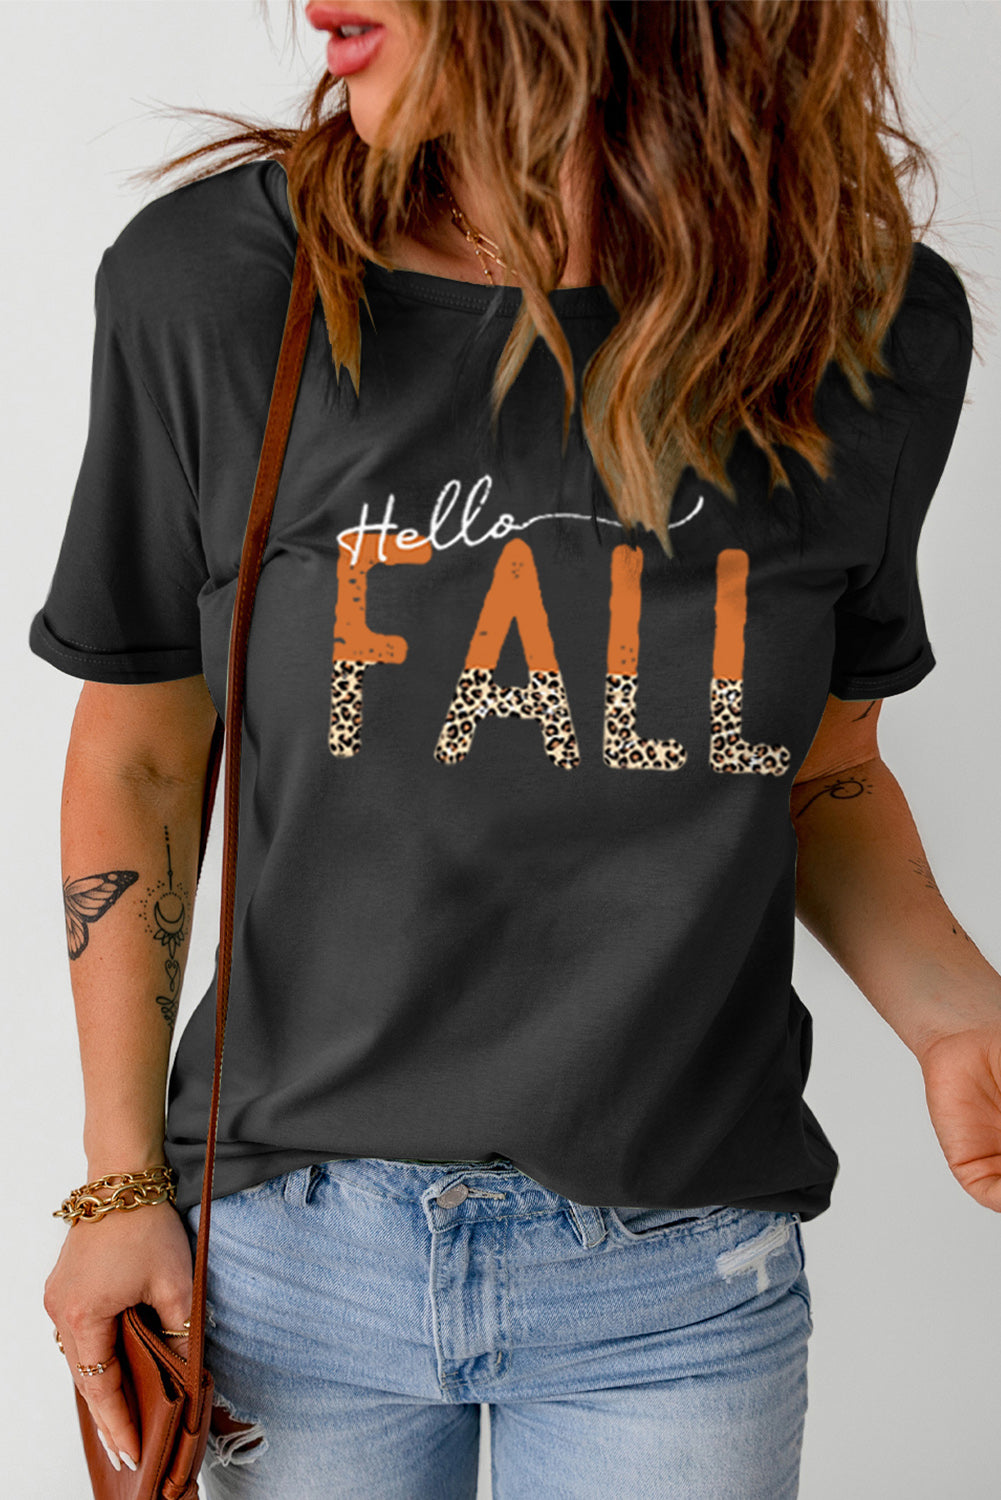 HELLO FALL Graphic Tee - Babbazon t-shirt